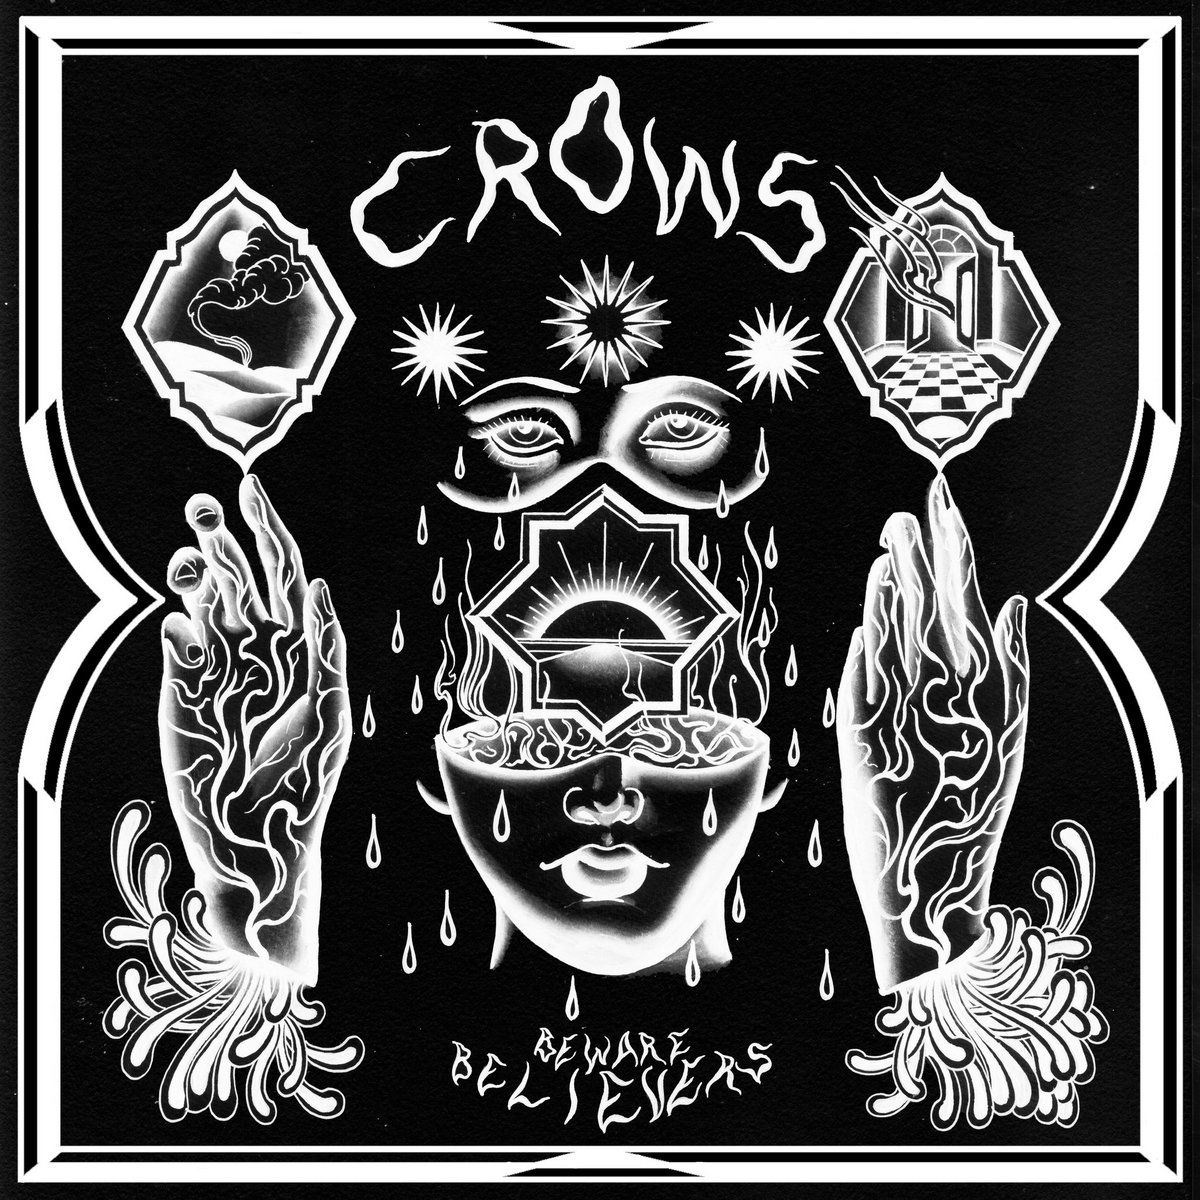 Crows – Beware believers (rock alternatif)